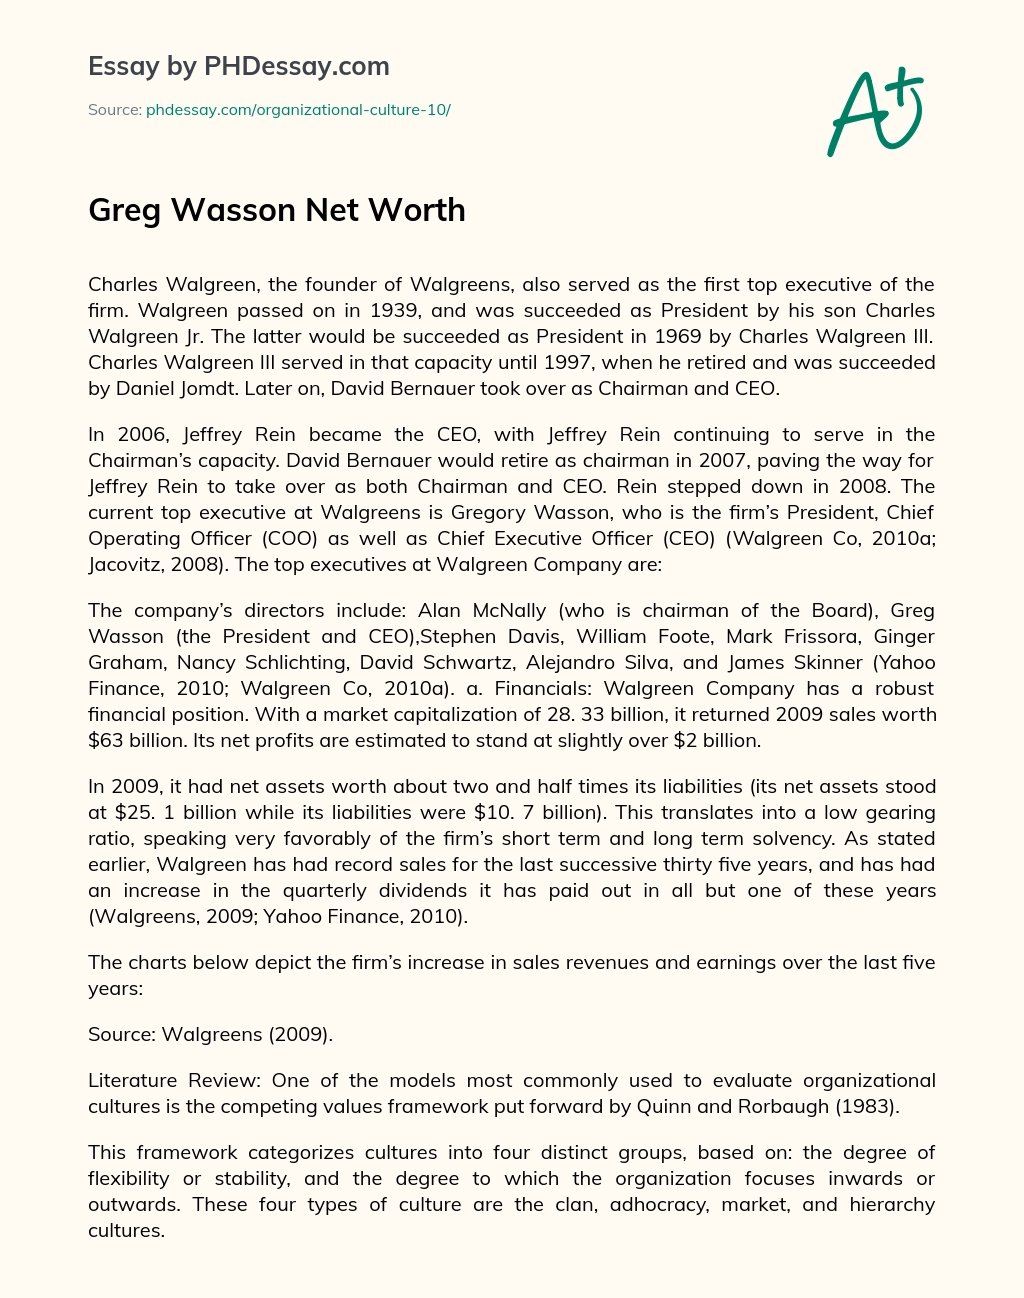 Greg Wasson Net Worth essay